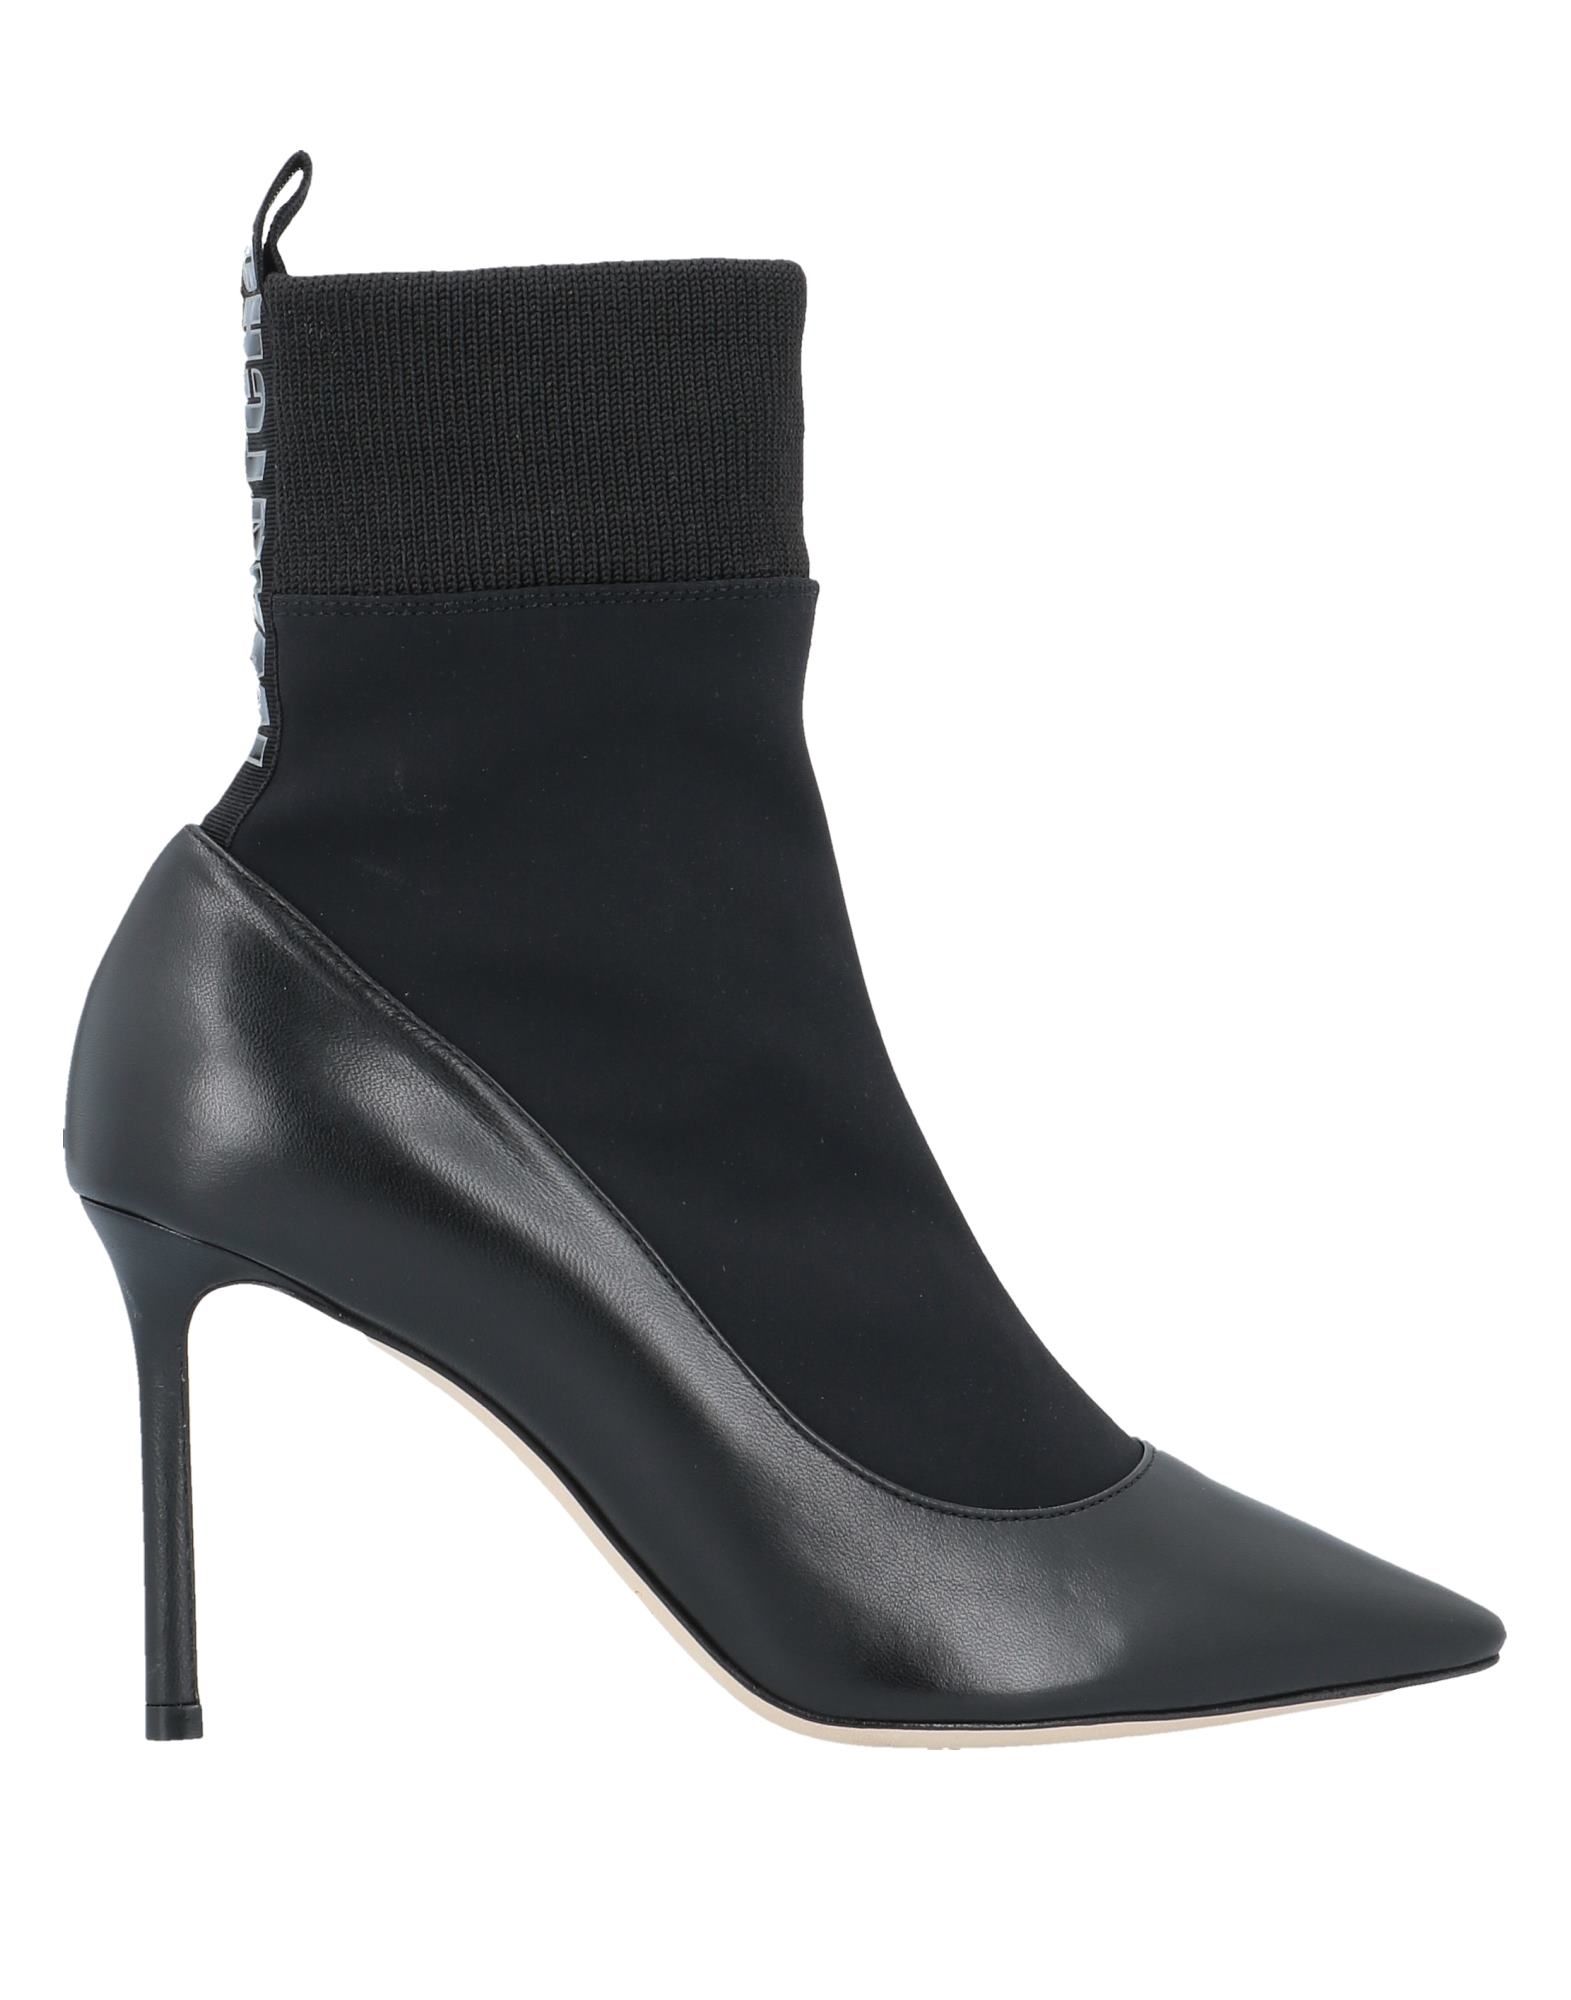 Shop Jimmy Choo Woman Ankle Boots Black Size 6 Soft Leather, Textile Fibers